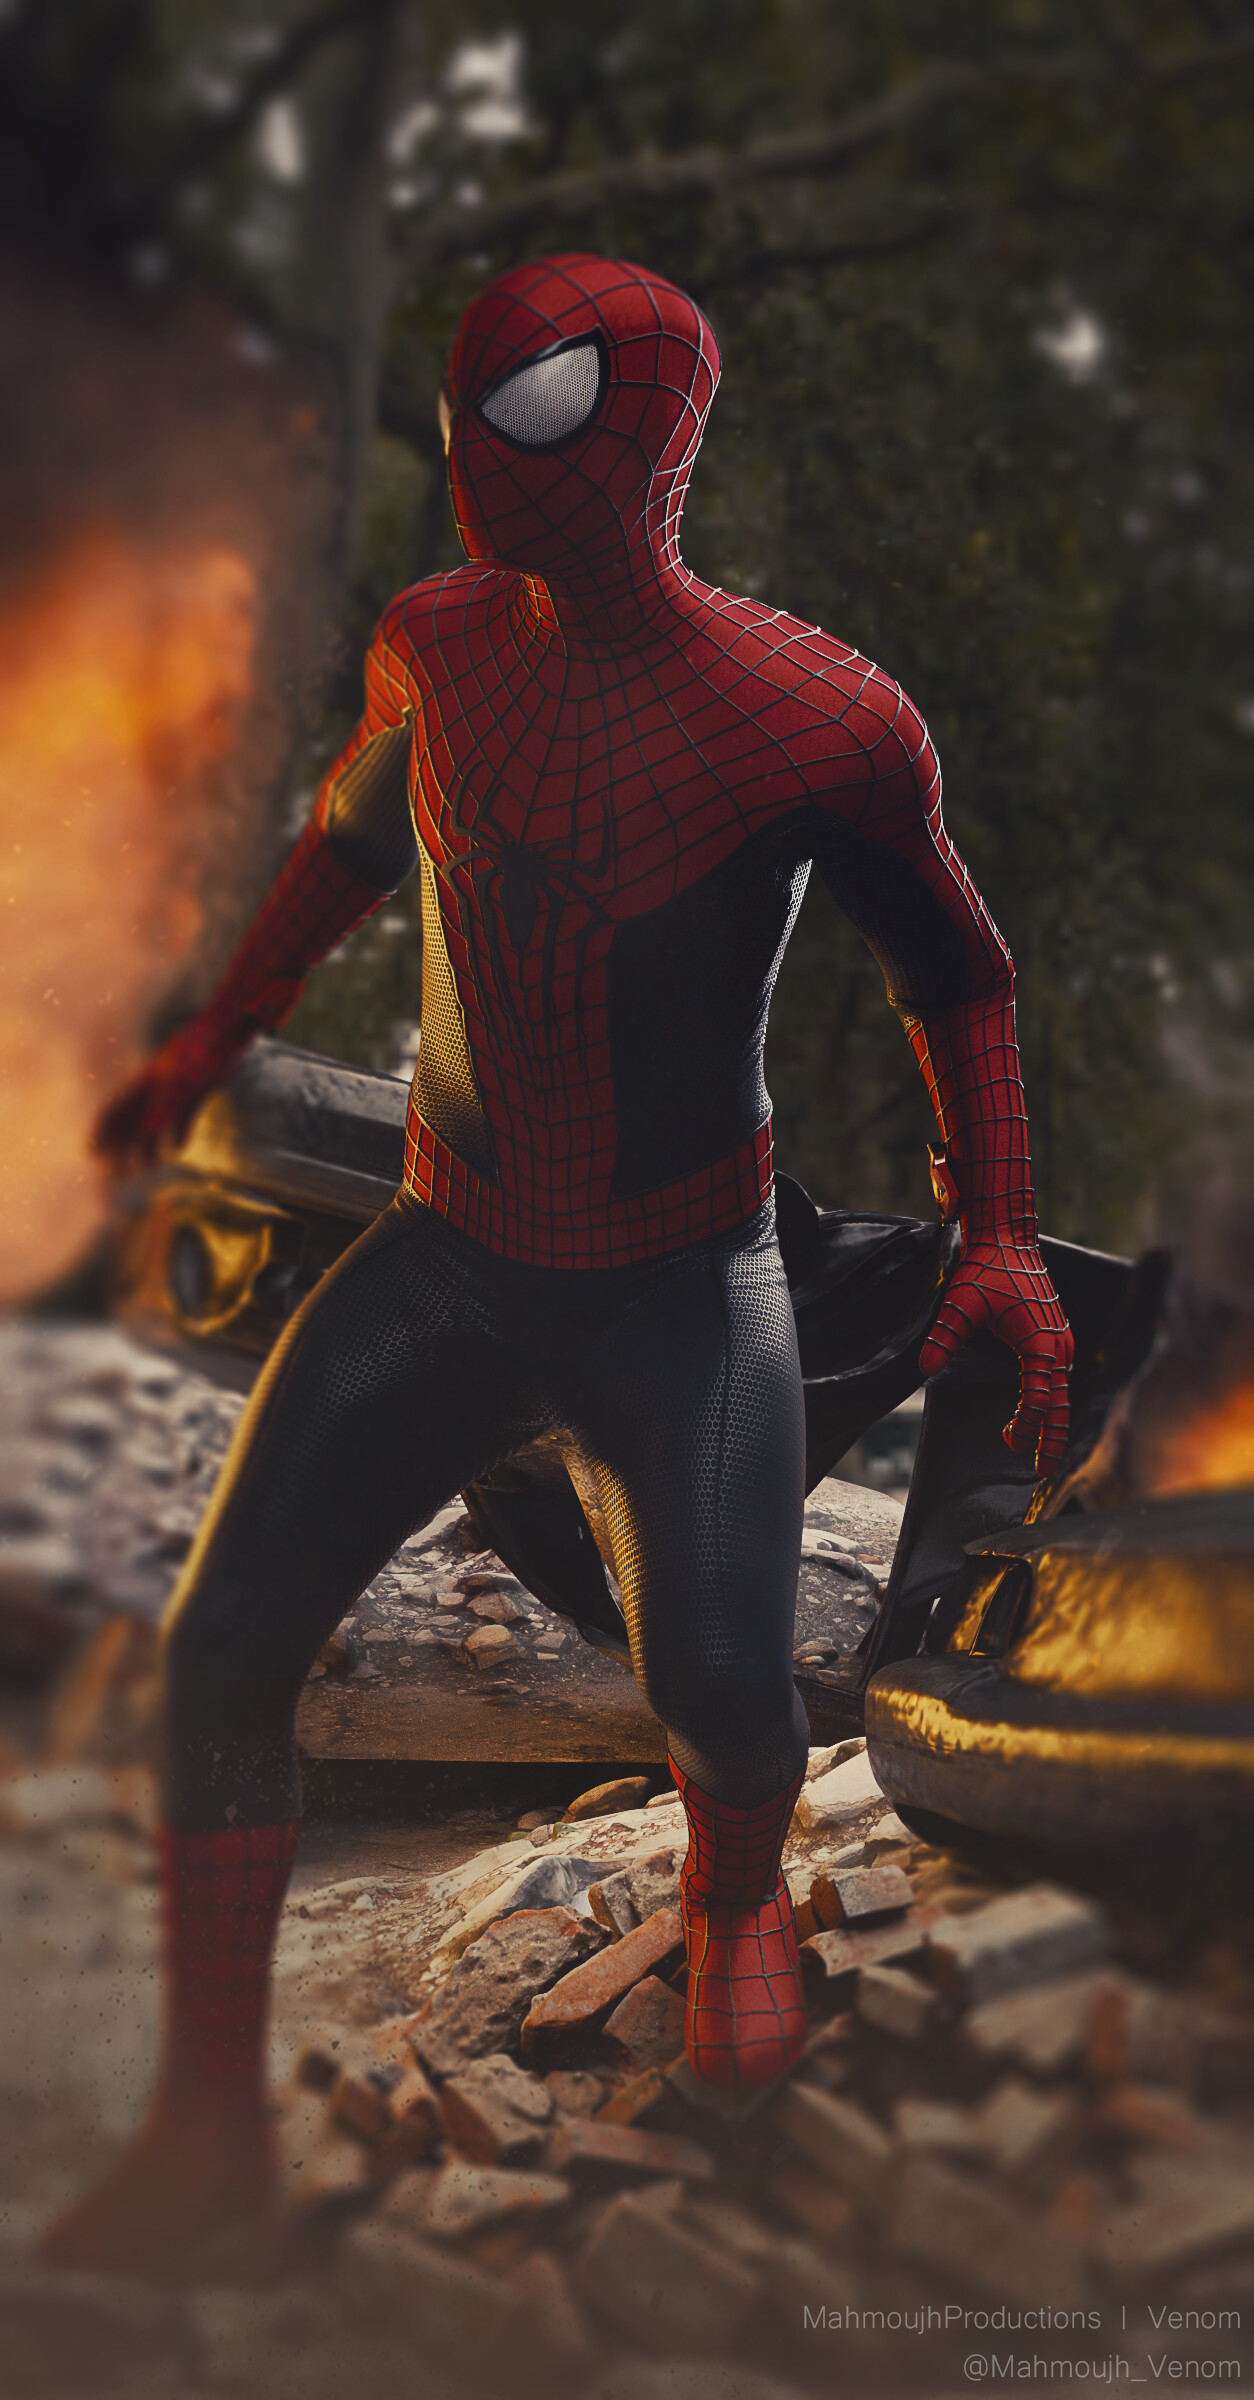 ArtStation - The Amazing Spider-man 2 suit